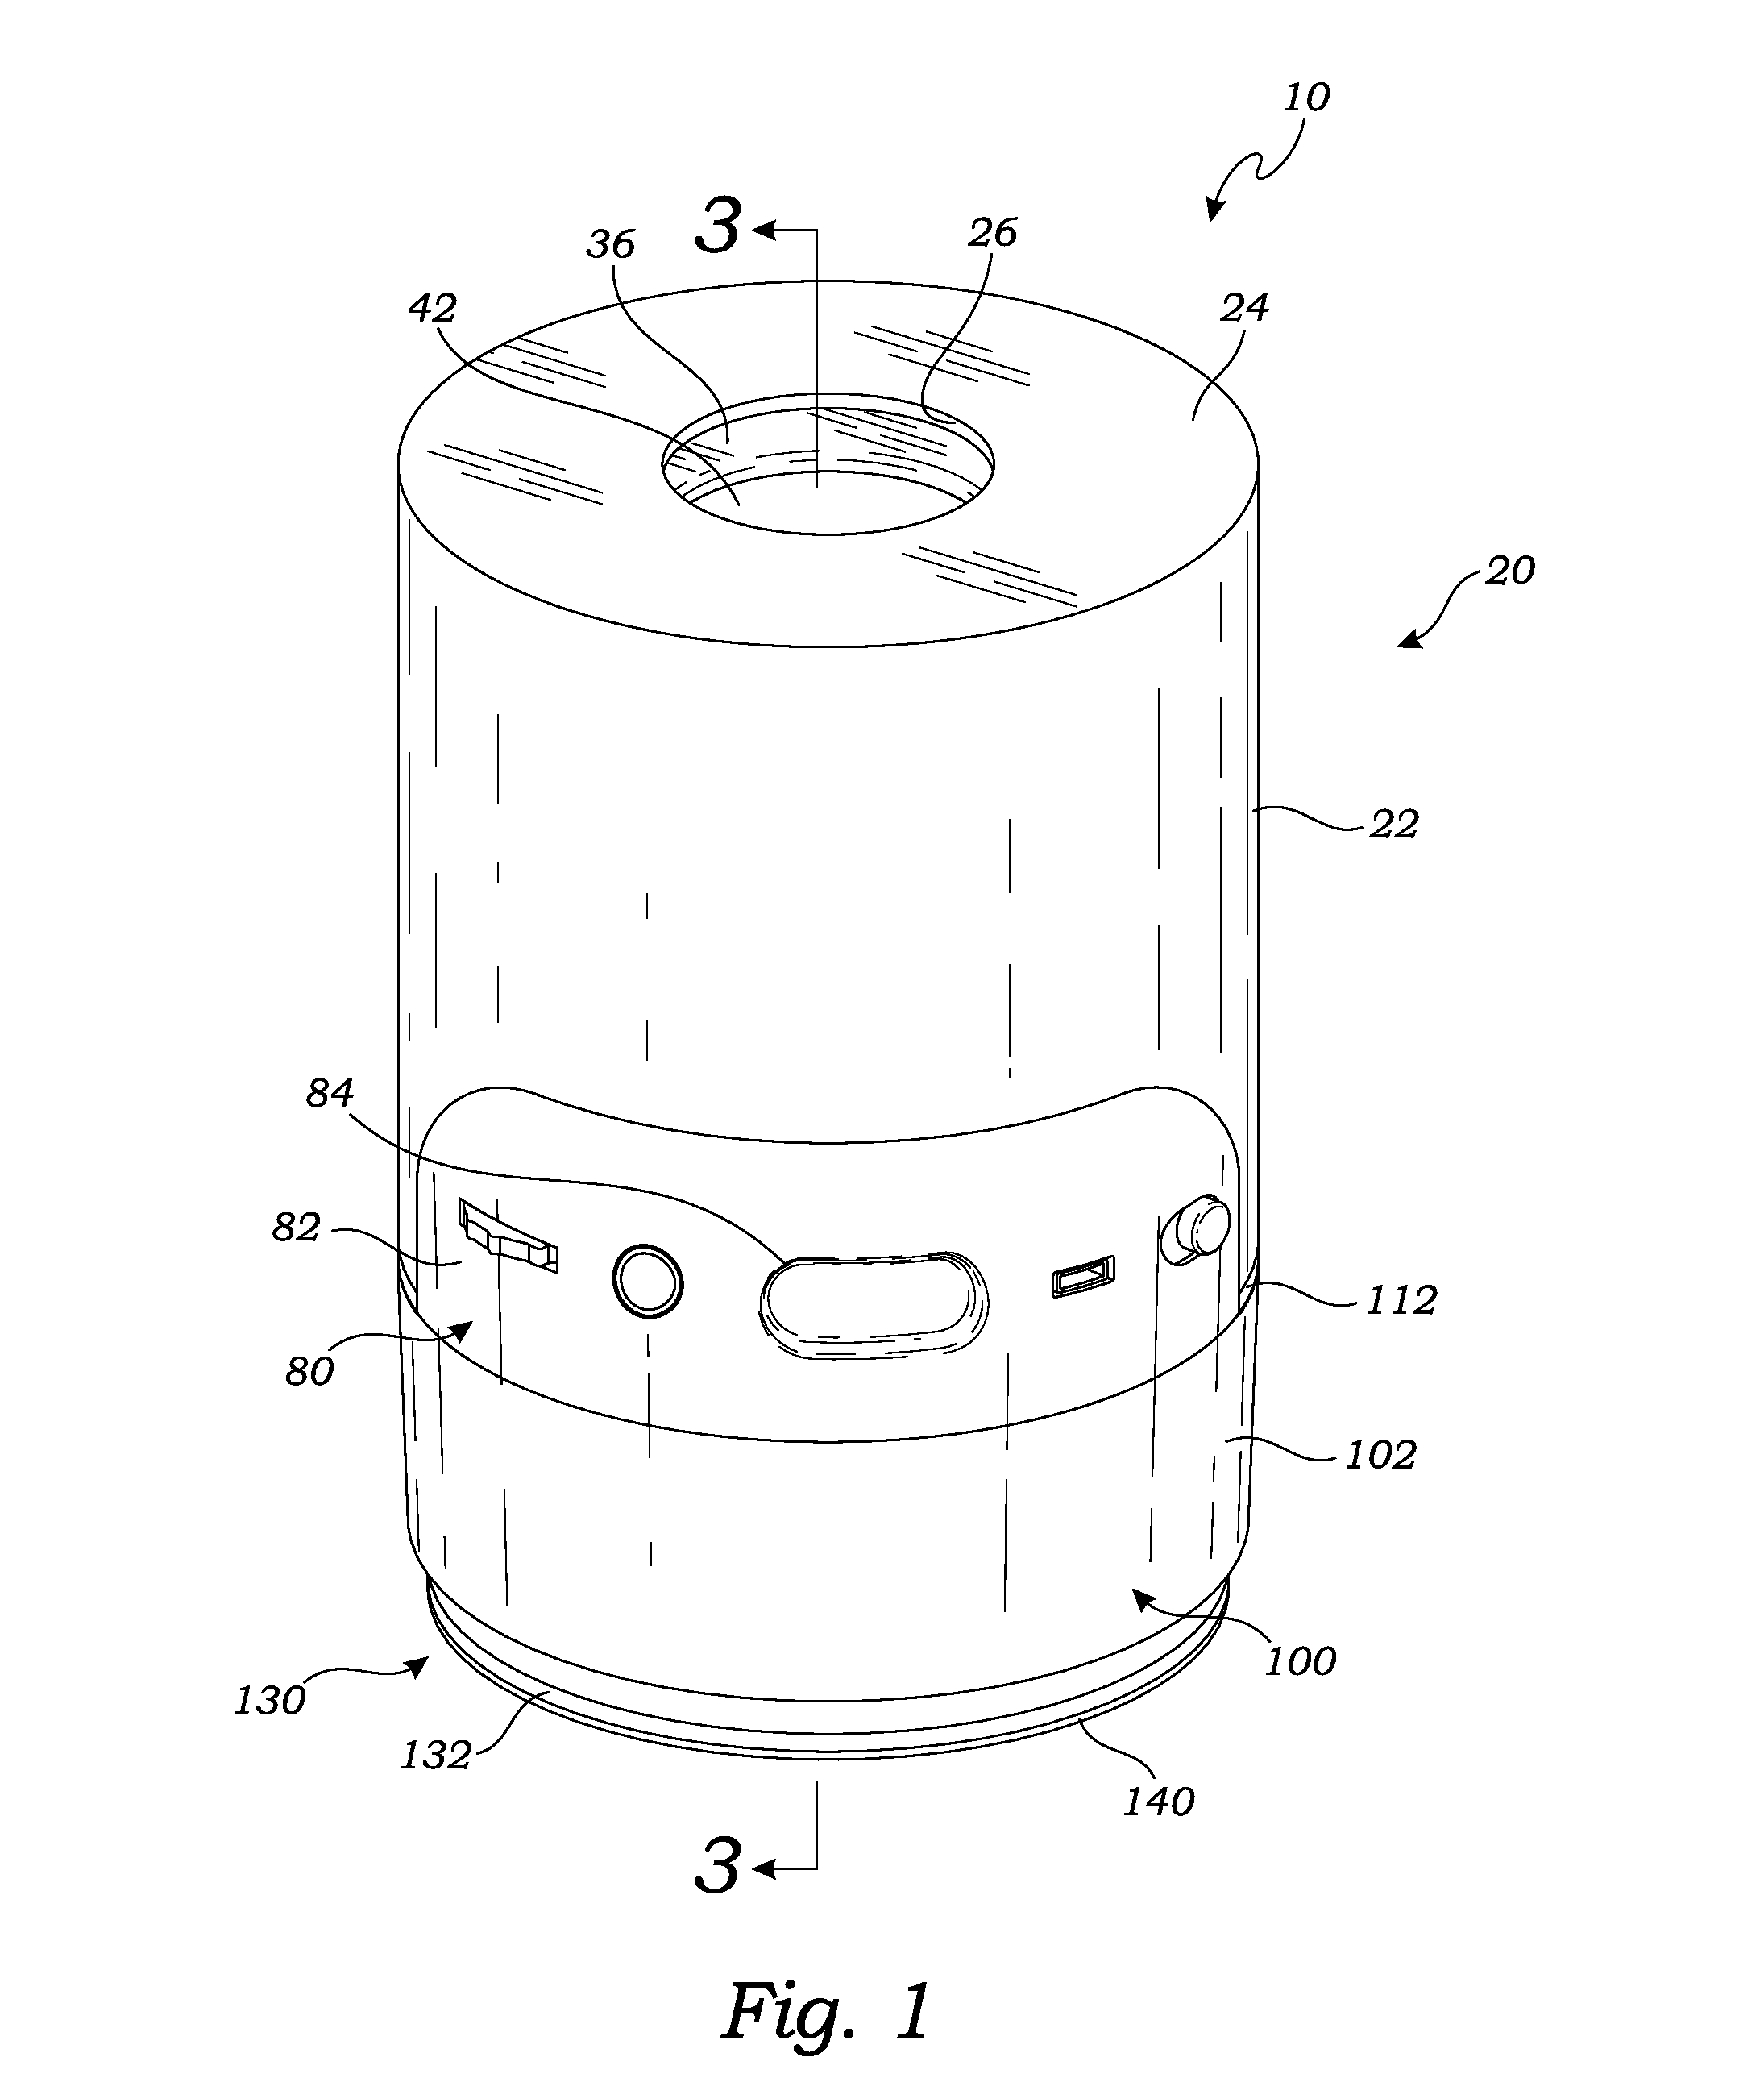 Speaker apparatus for producing sound